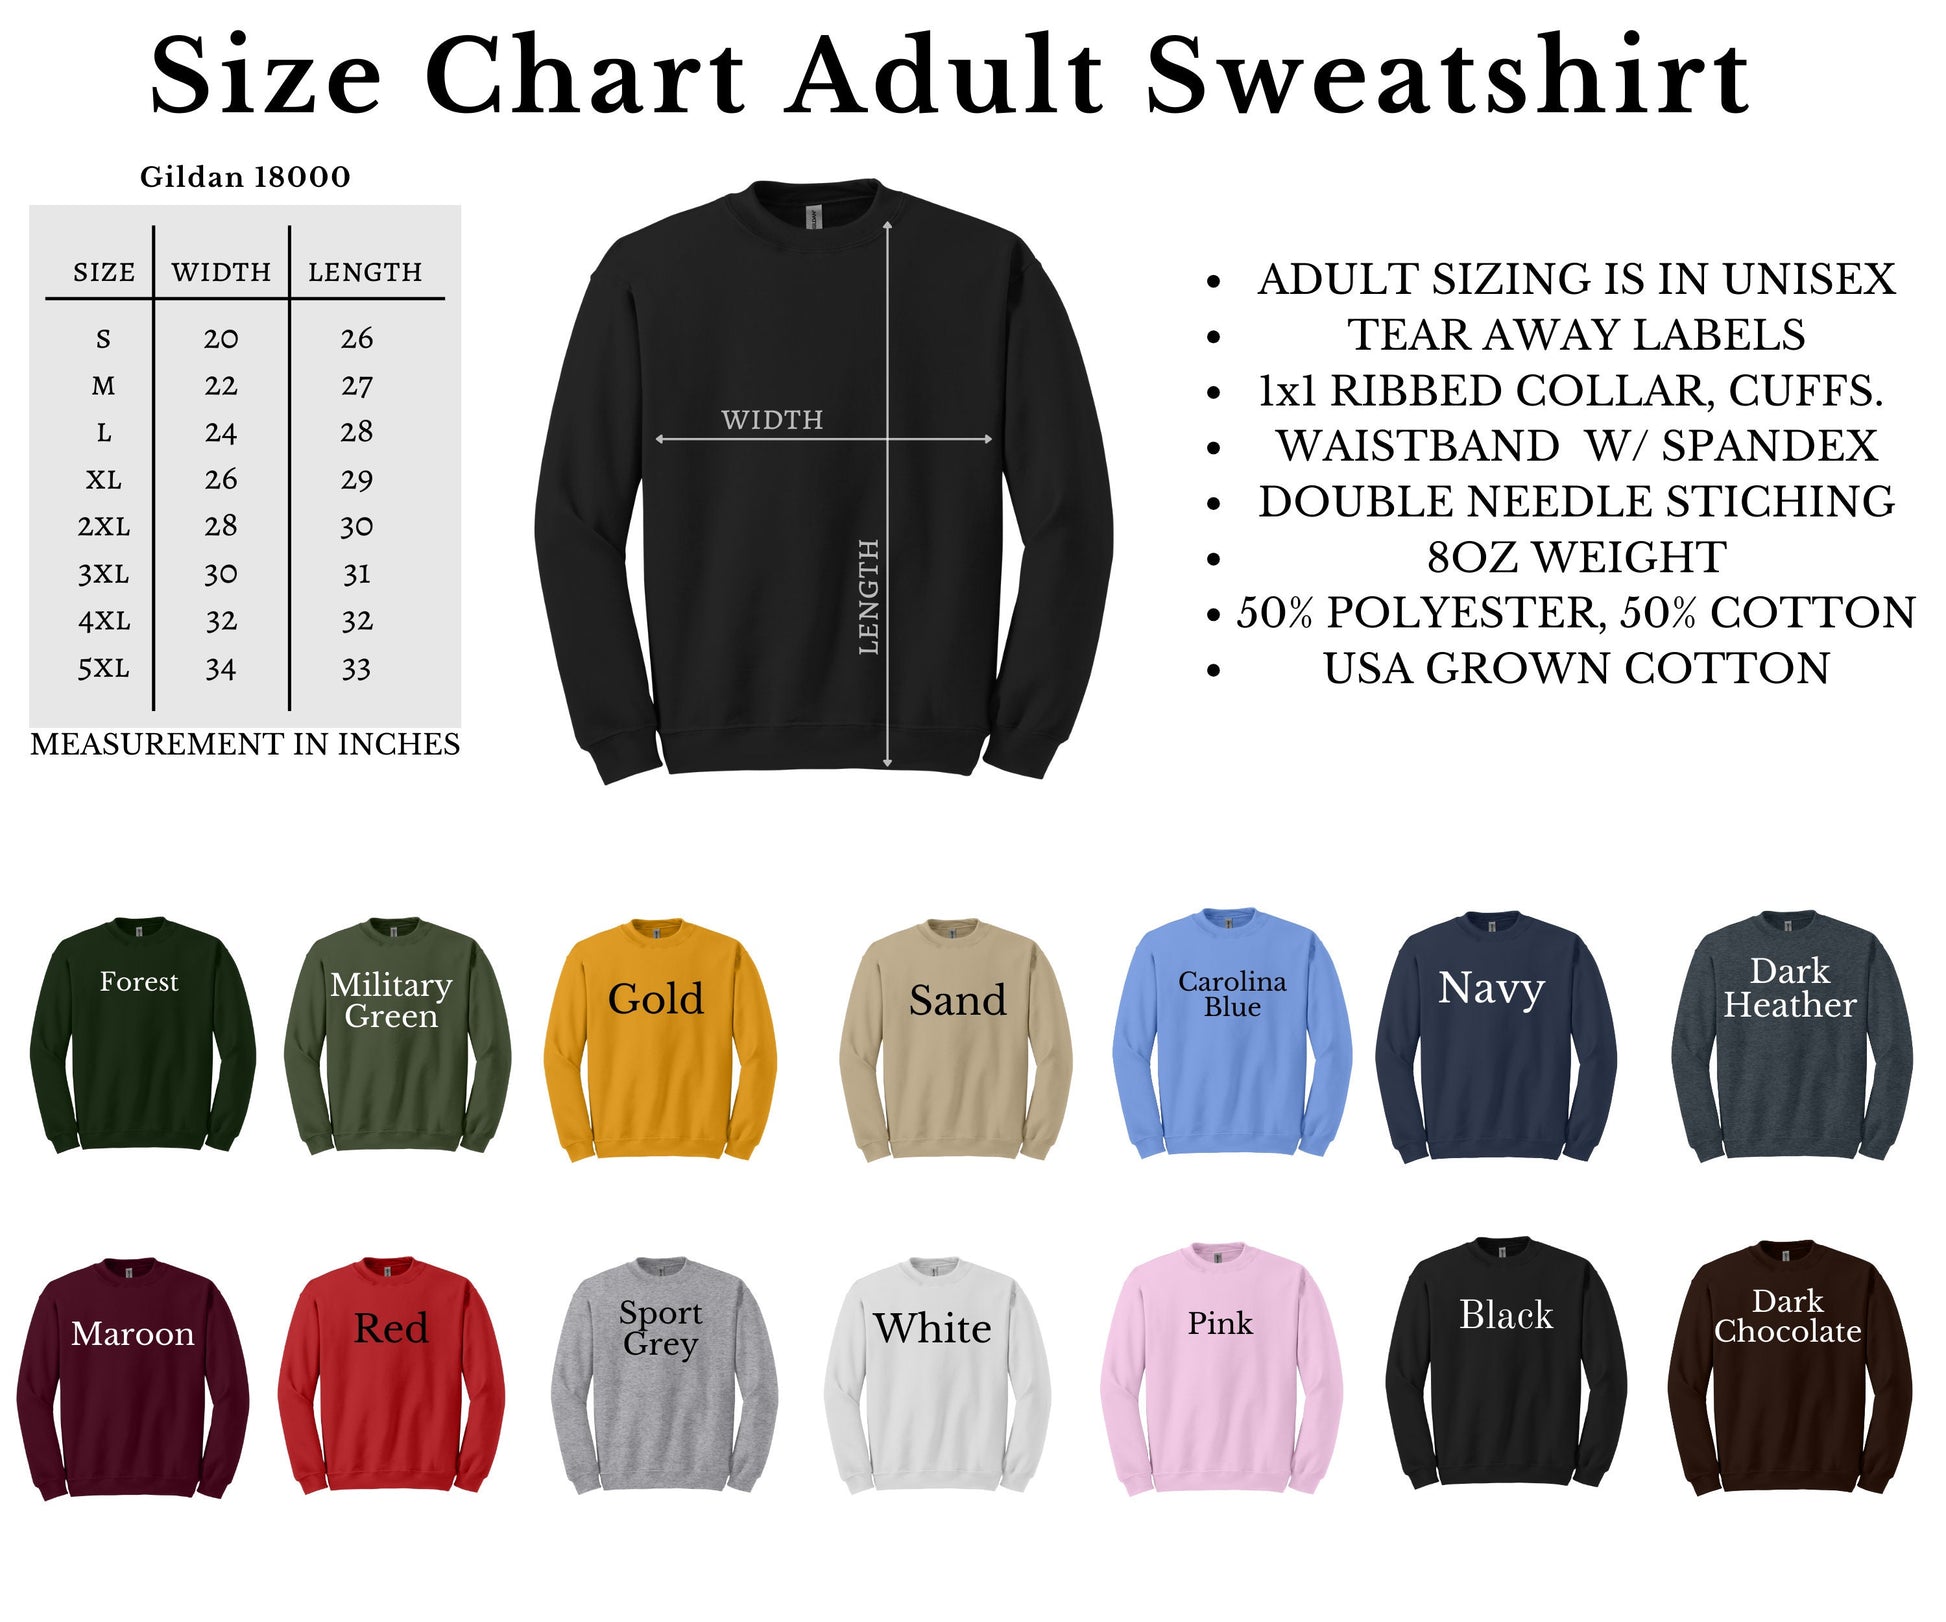 Uncles Favorite Sweatshirt, Uncles Favorite Shirt, Uncles Favorite Crewneck, Uncles Favorite Sweater, Oversized Sweater, Comfy Sweatshirt